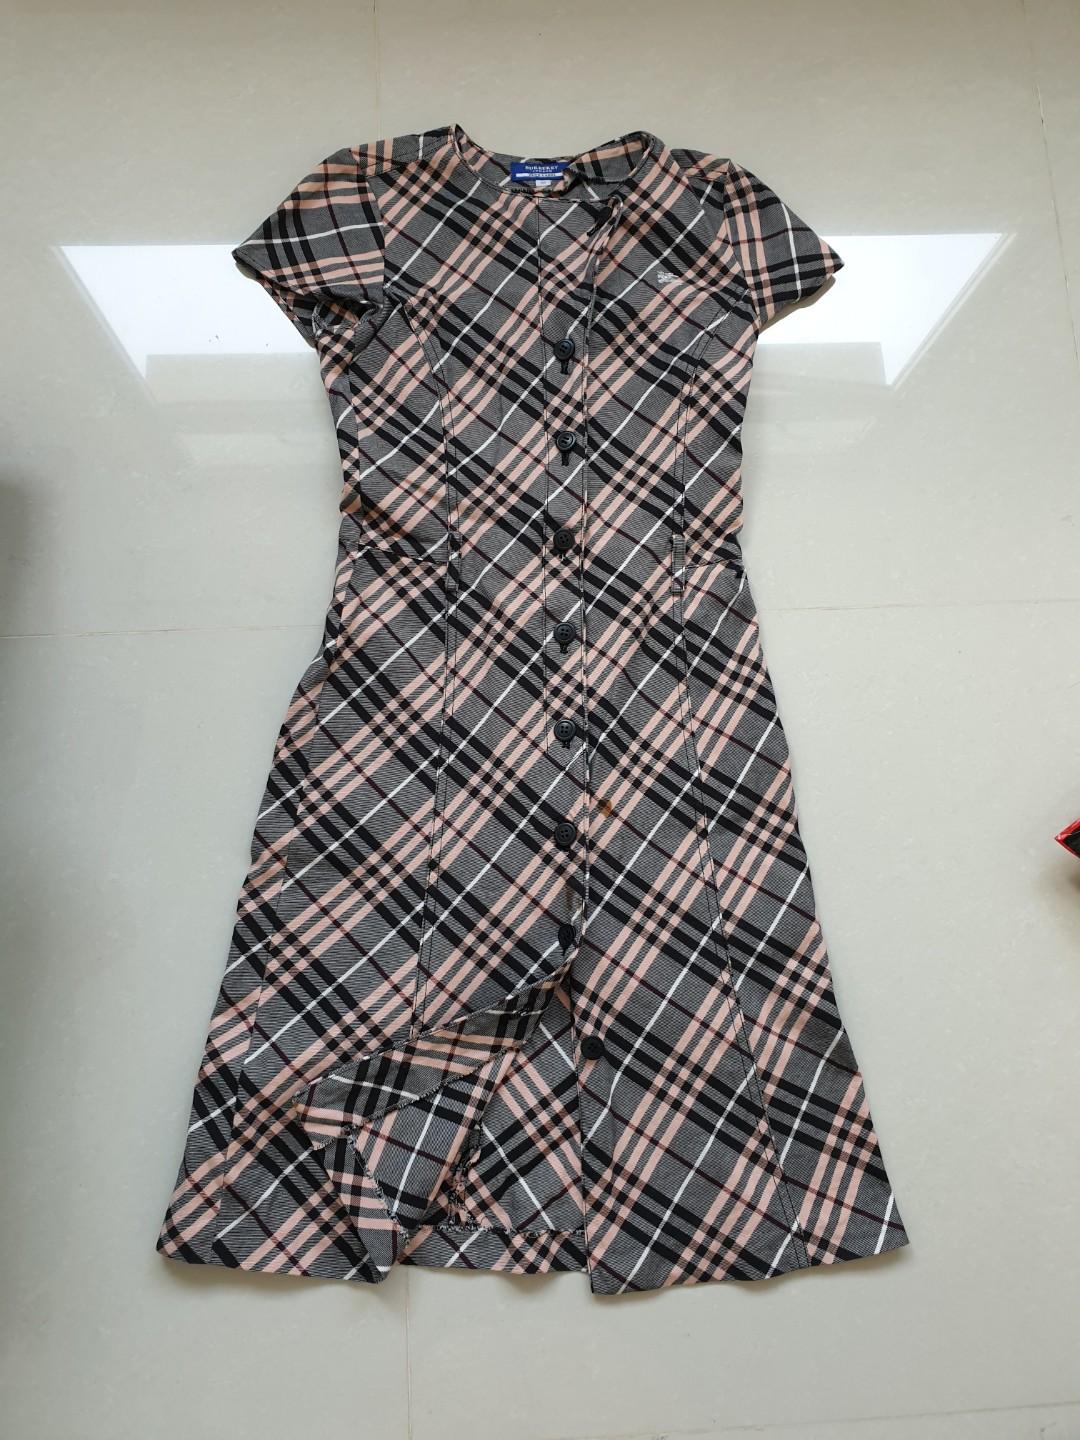 ANNIV SALE! Burberry Checkered Dress 